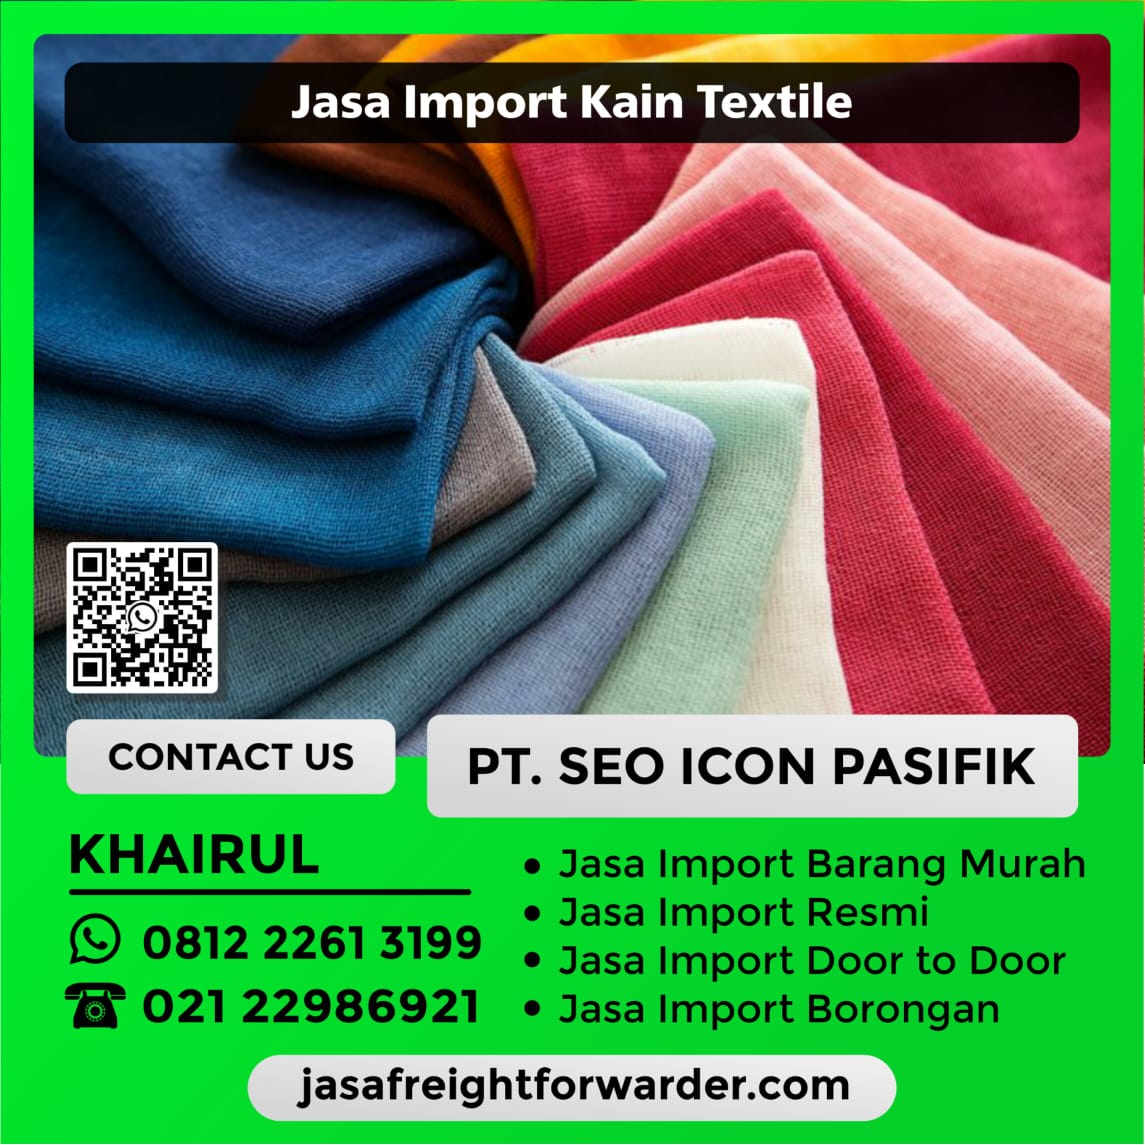 Jasa-Import-Kain-Textile.jpeg